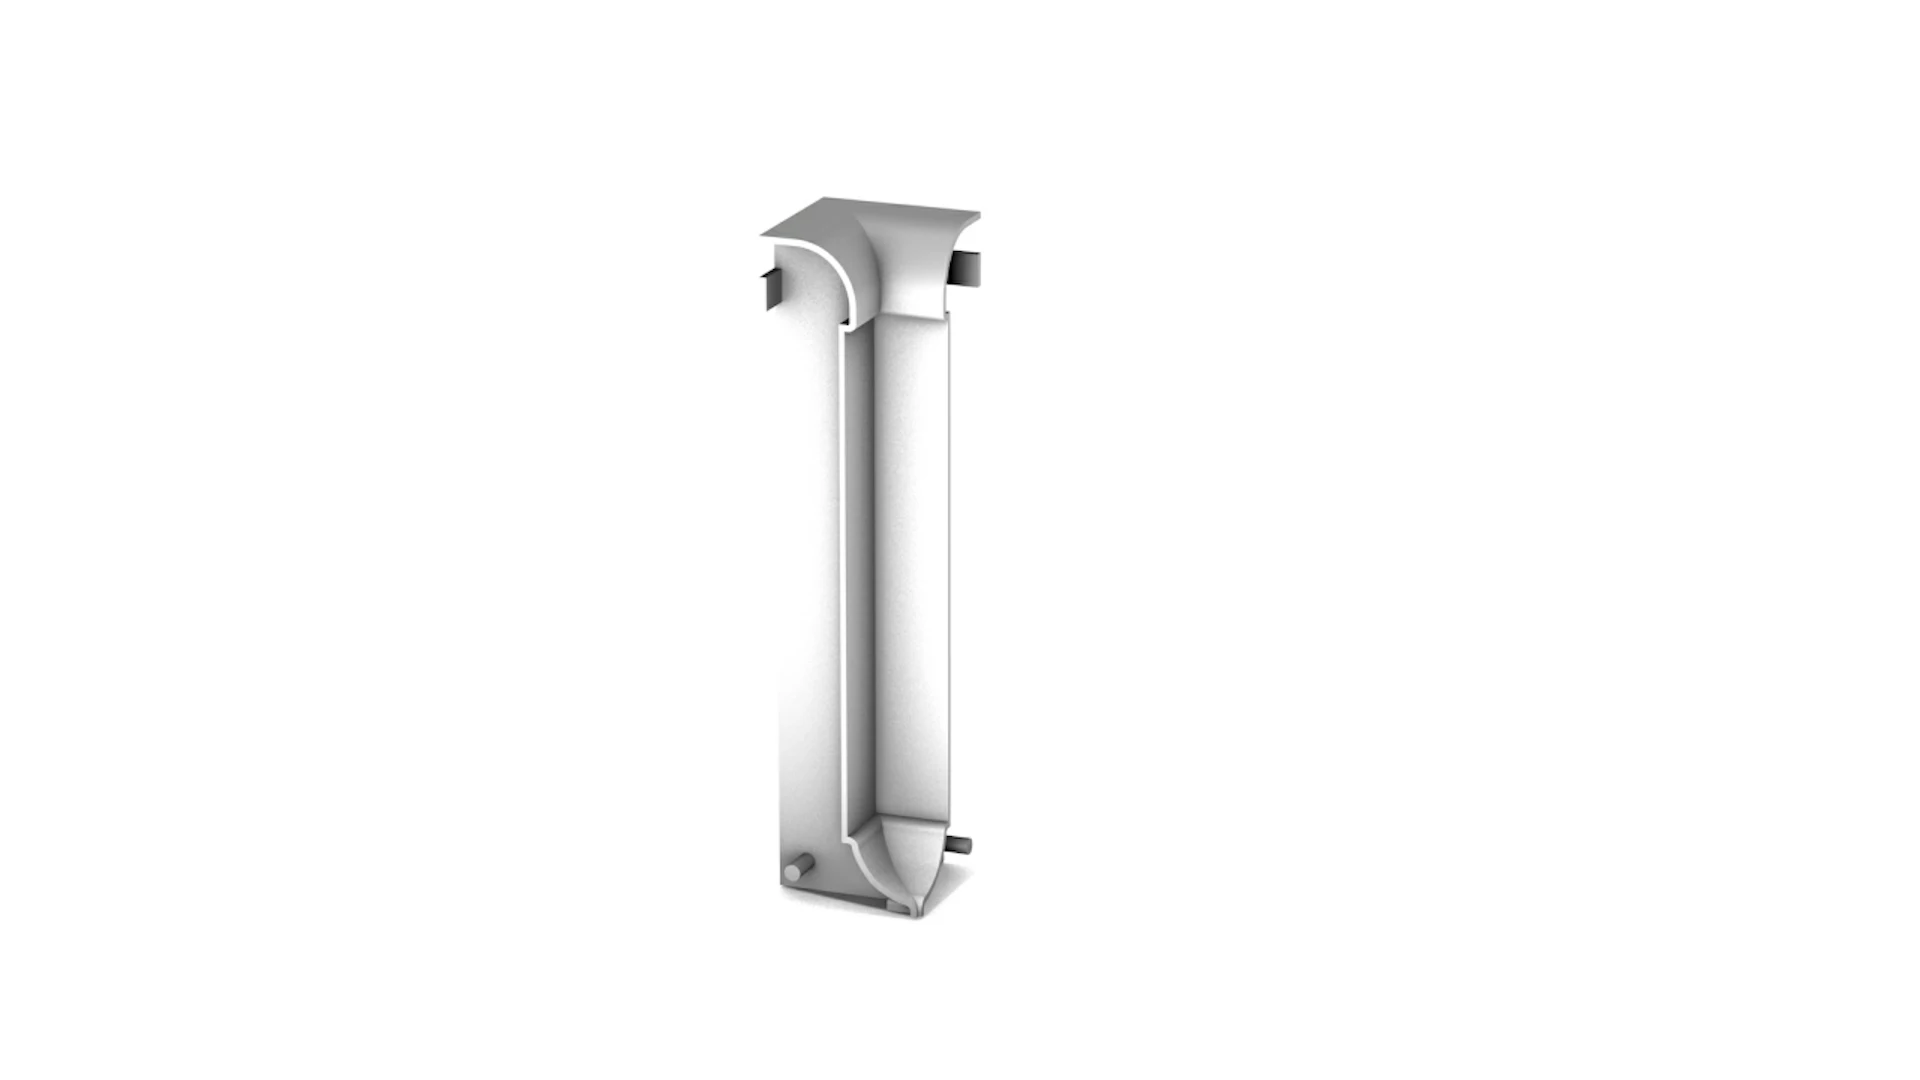 Prinz inside corner for aluminium skirting board / baseboard - 13x60 mm - silver